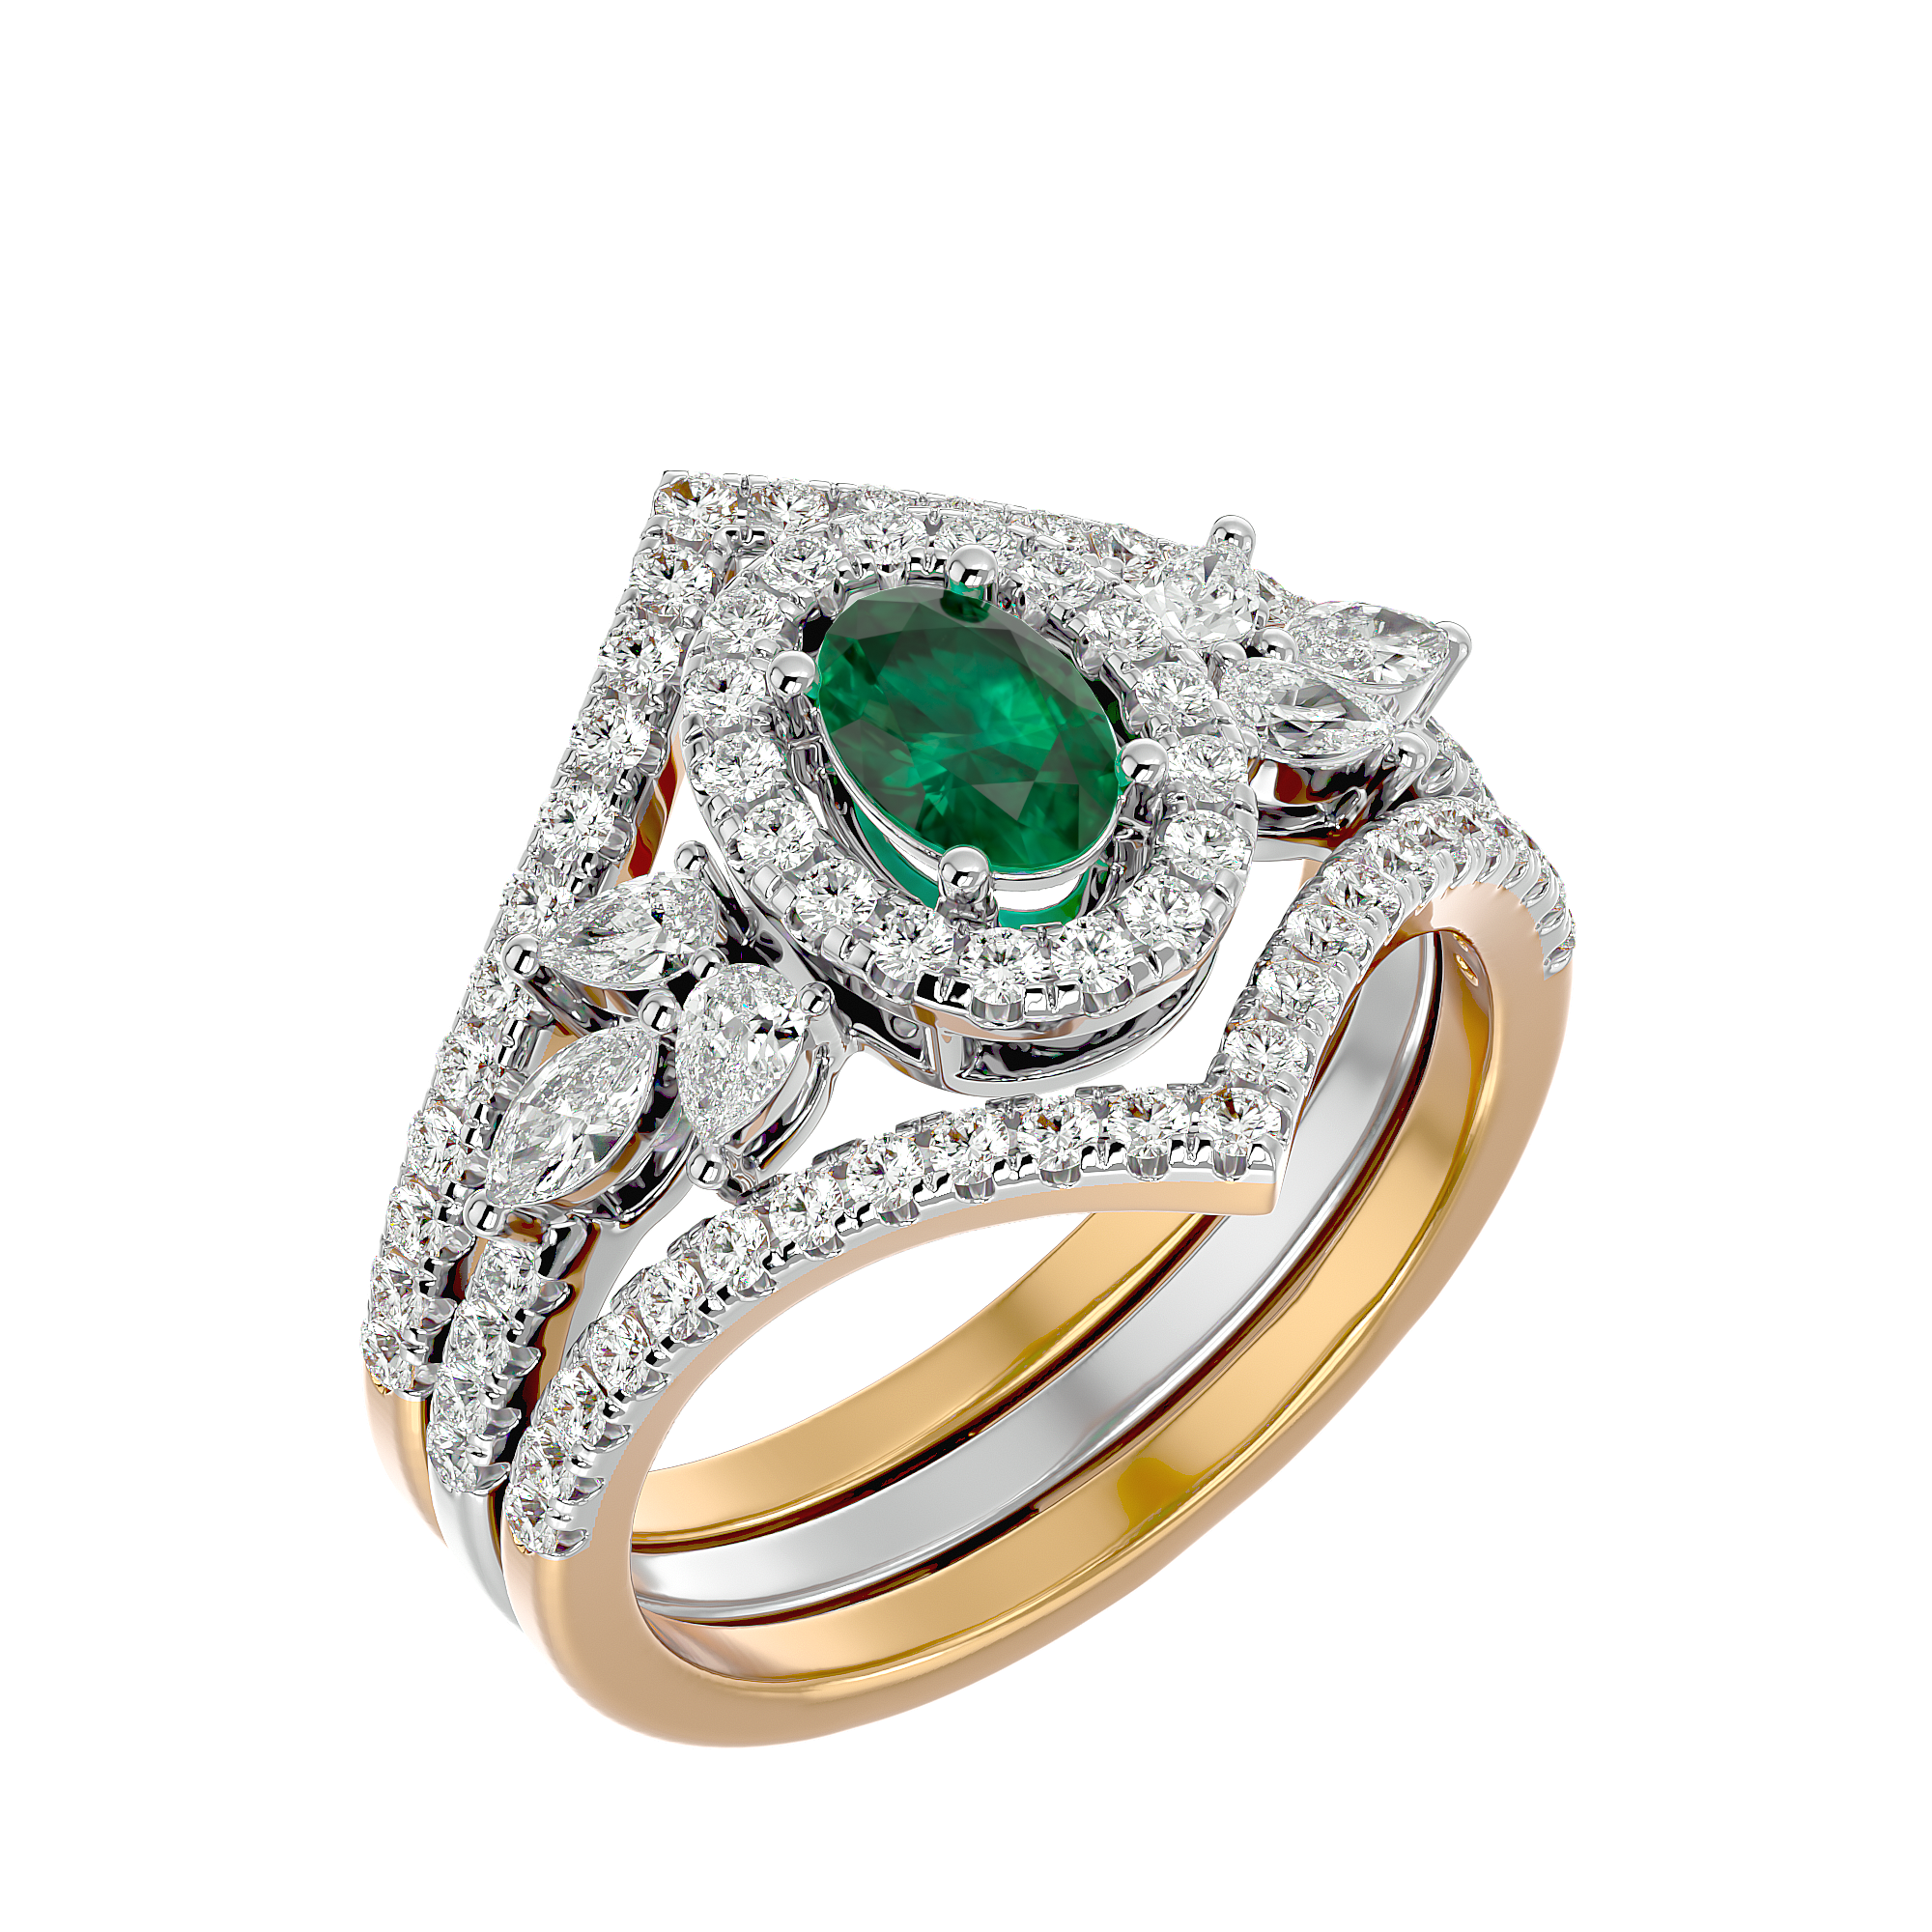 Breathtaking Beauty Diamond Ring made from VVS EF diamond quality with 0.91 carat diamonds